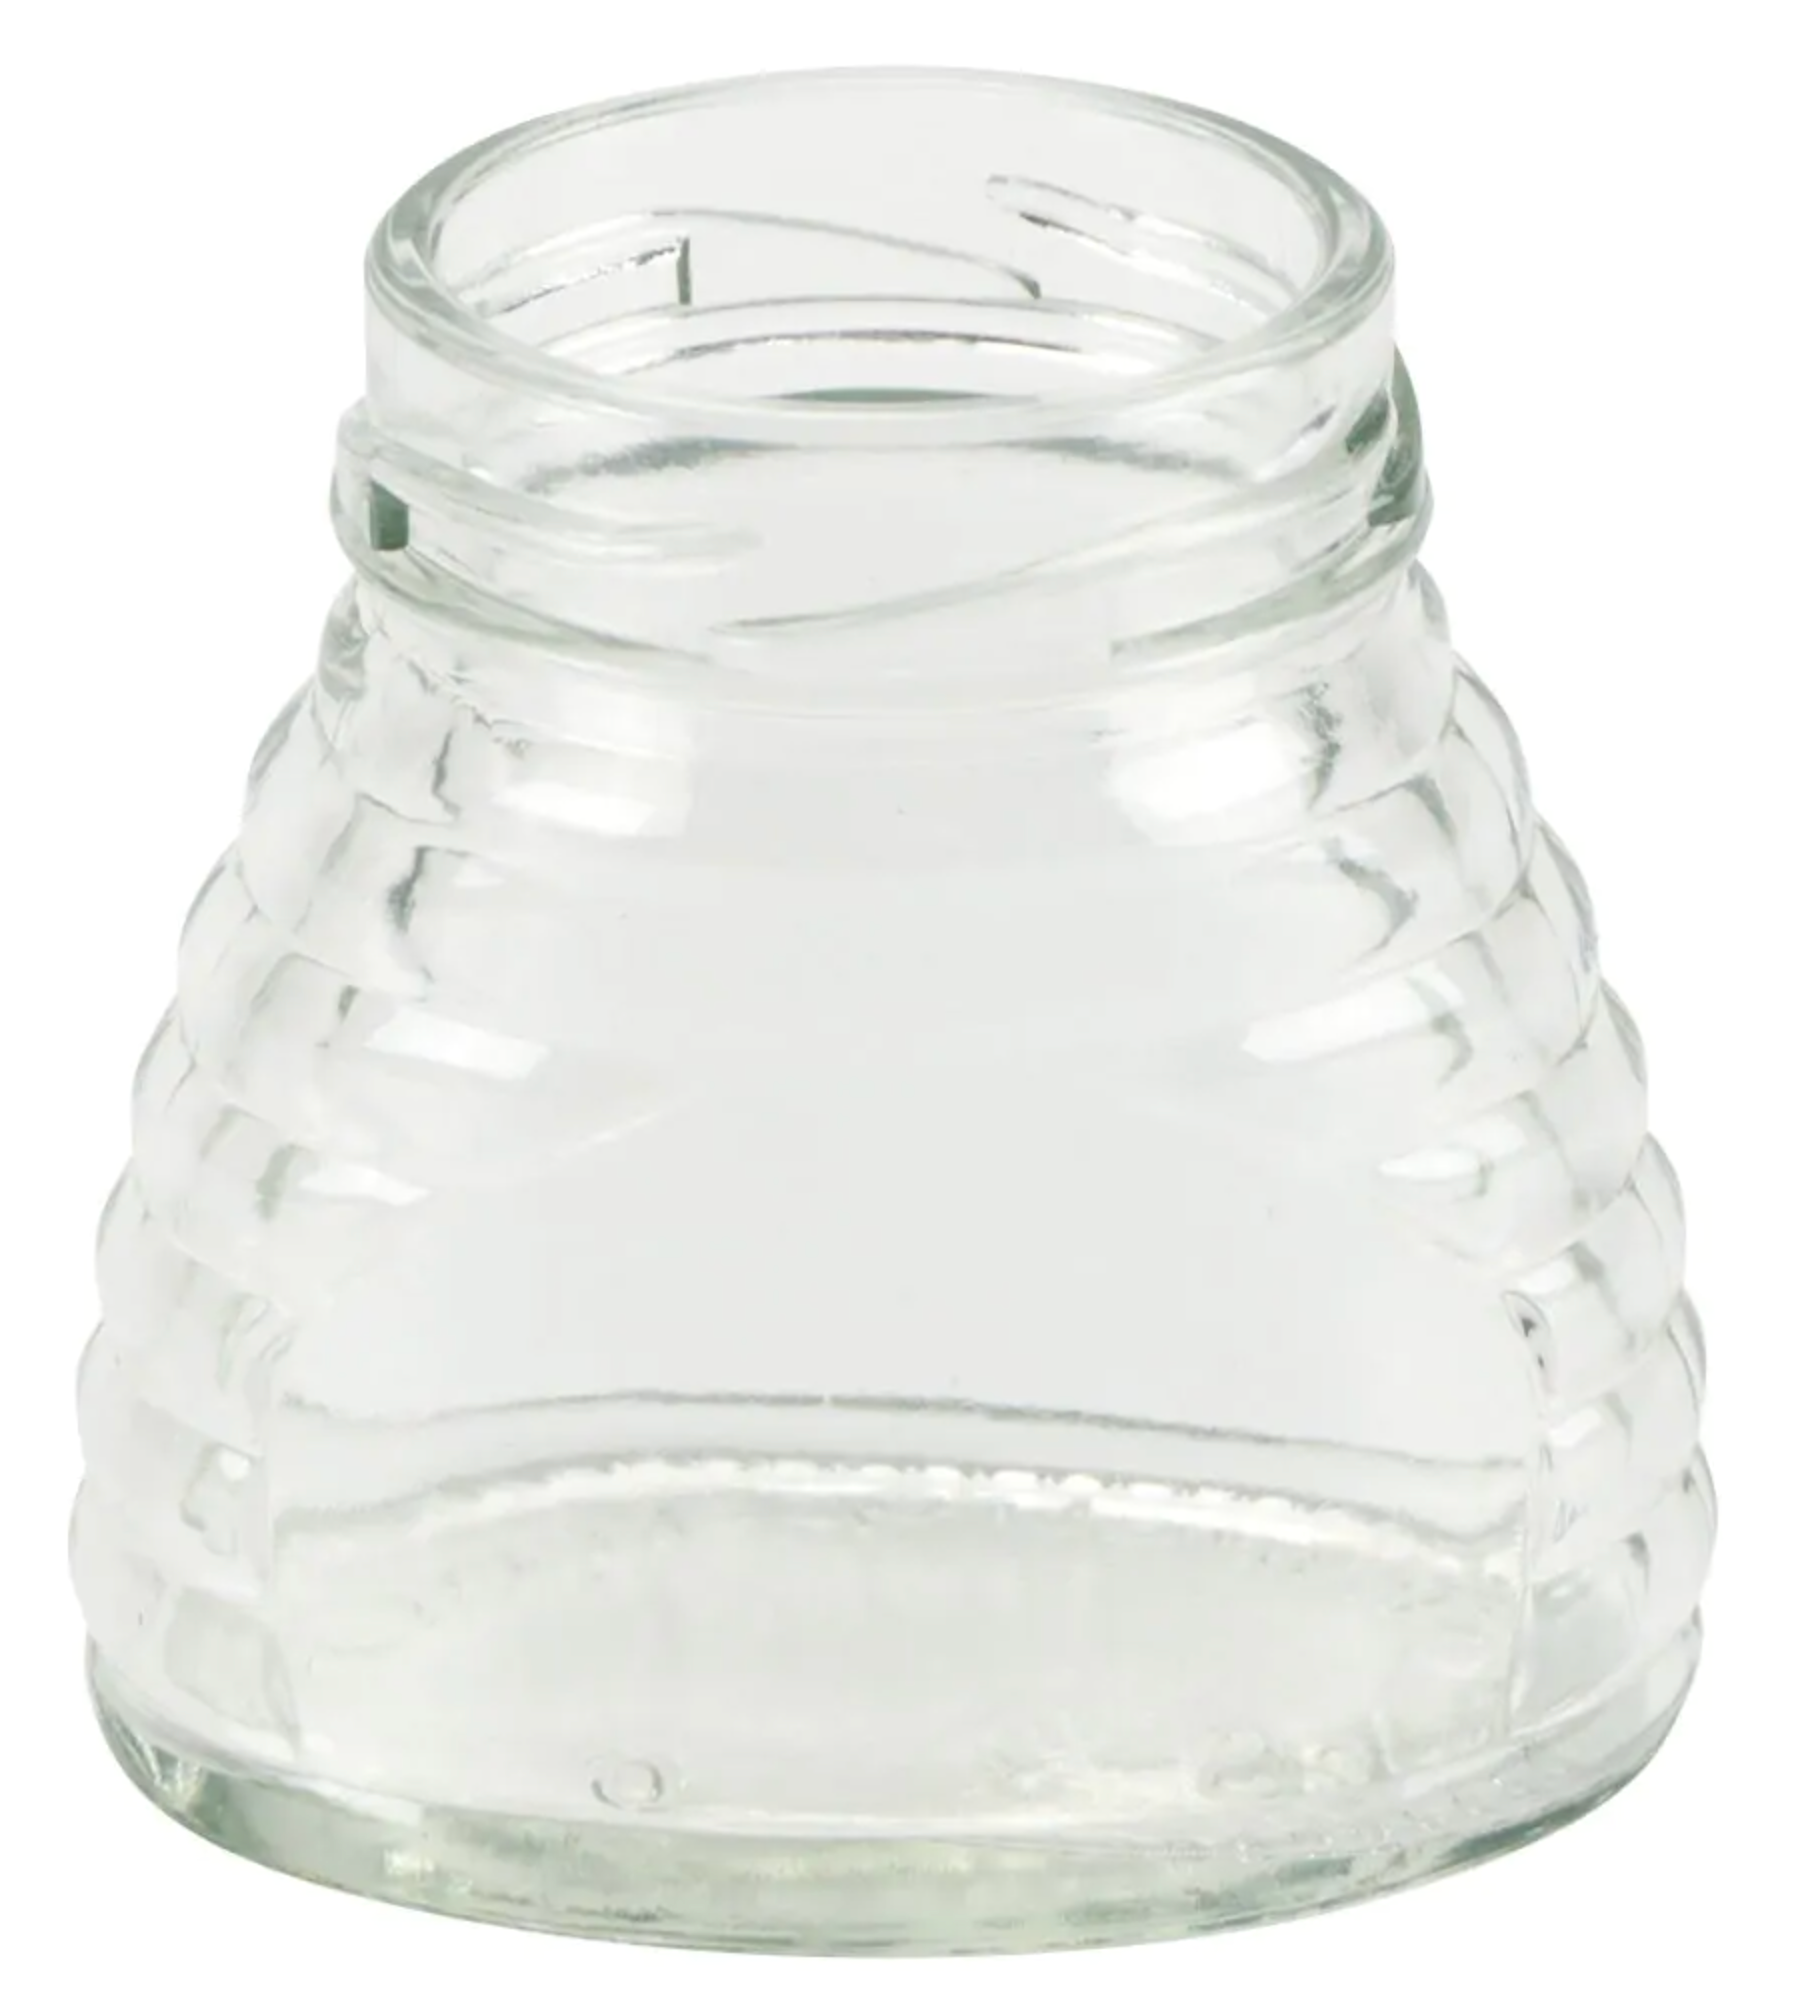 3 oz. Glass Skep Honey Jars - 24 Count Case - Includes Lids